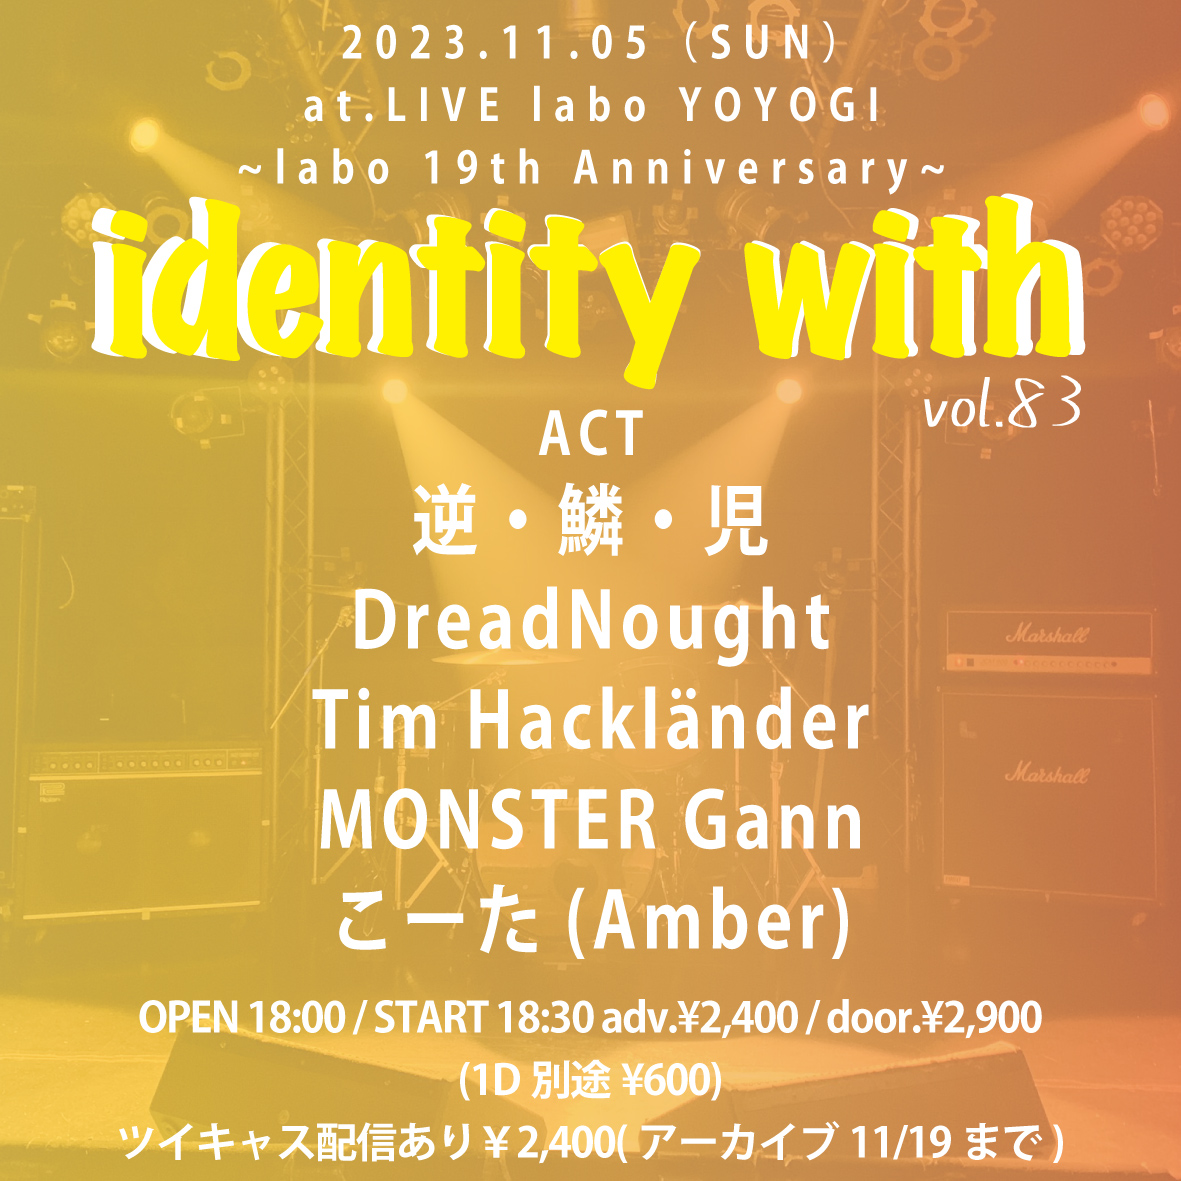 ～ labo 19th Anniversary!! ～
identity with vol.83